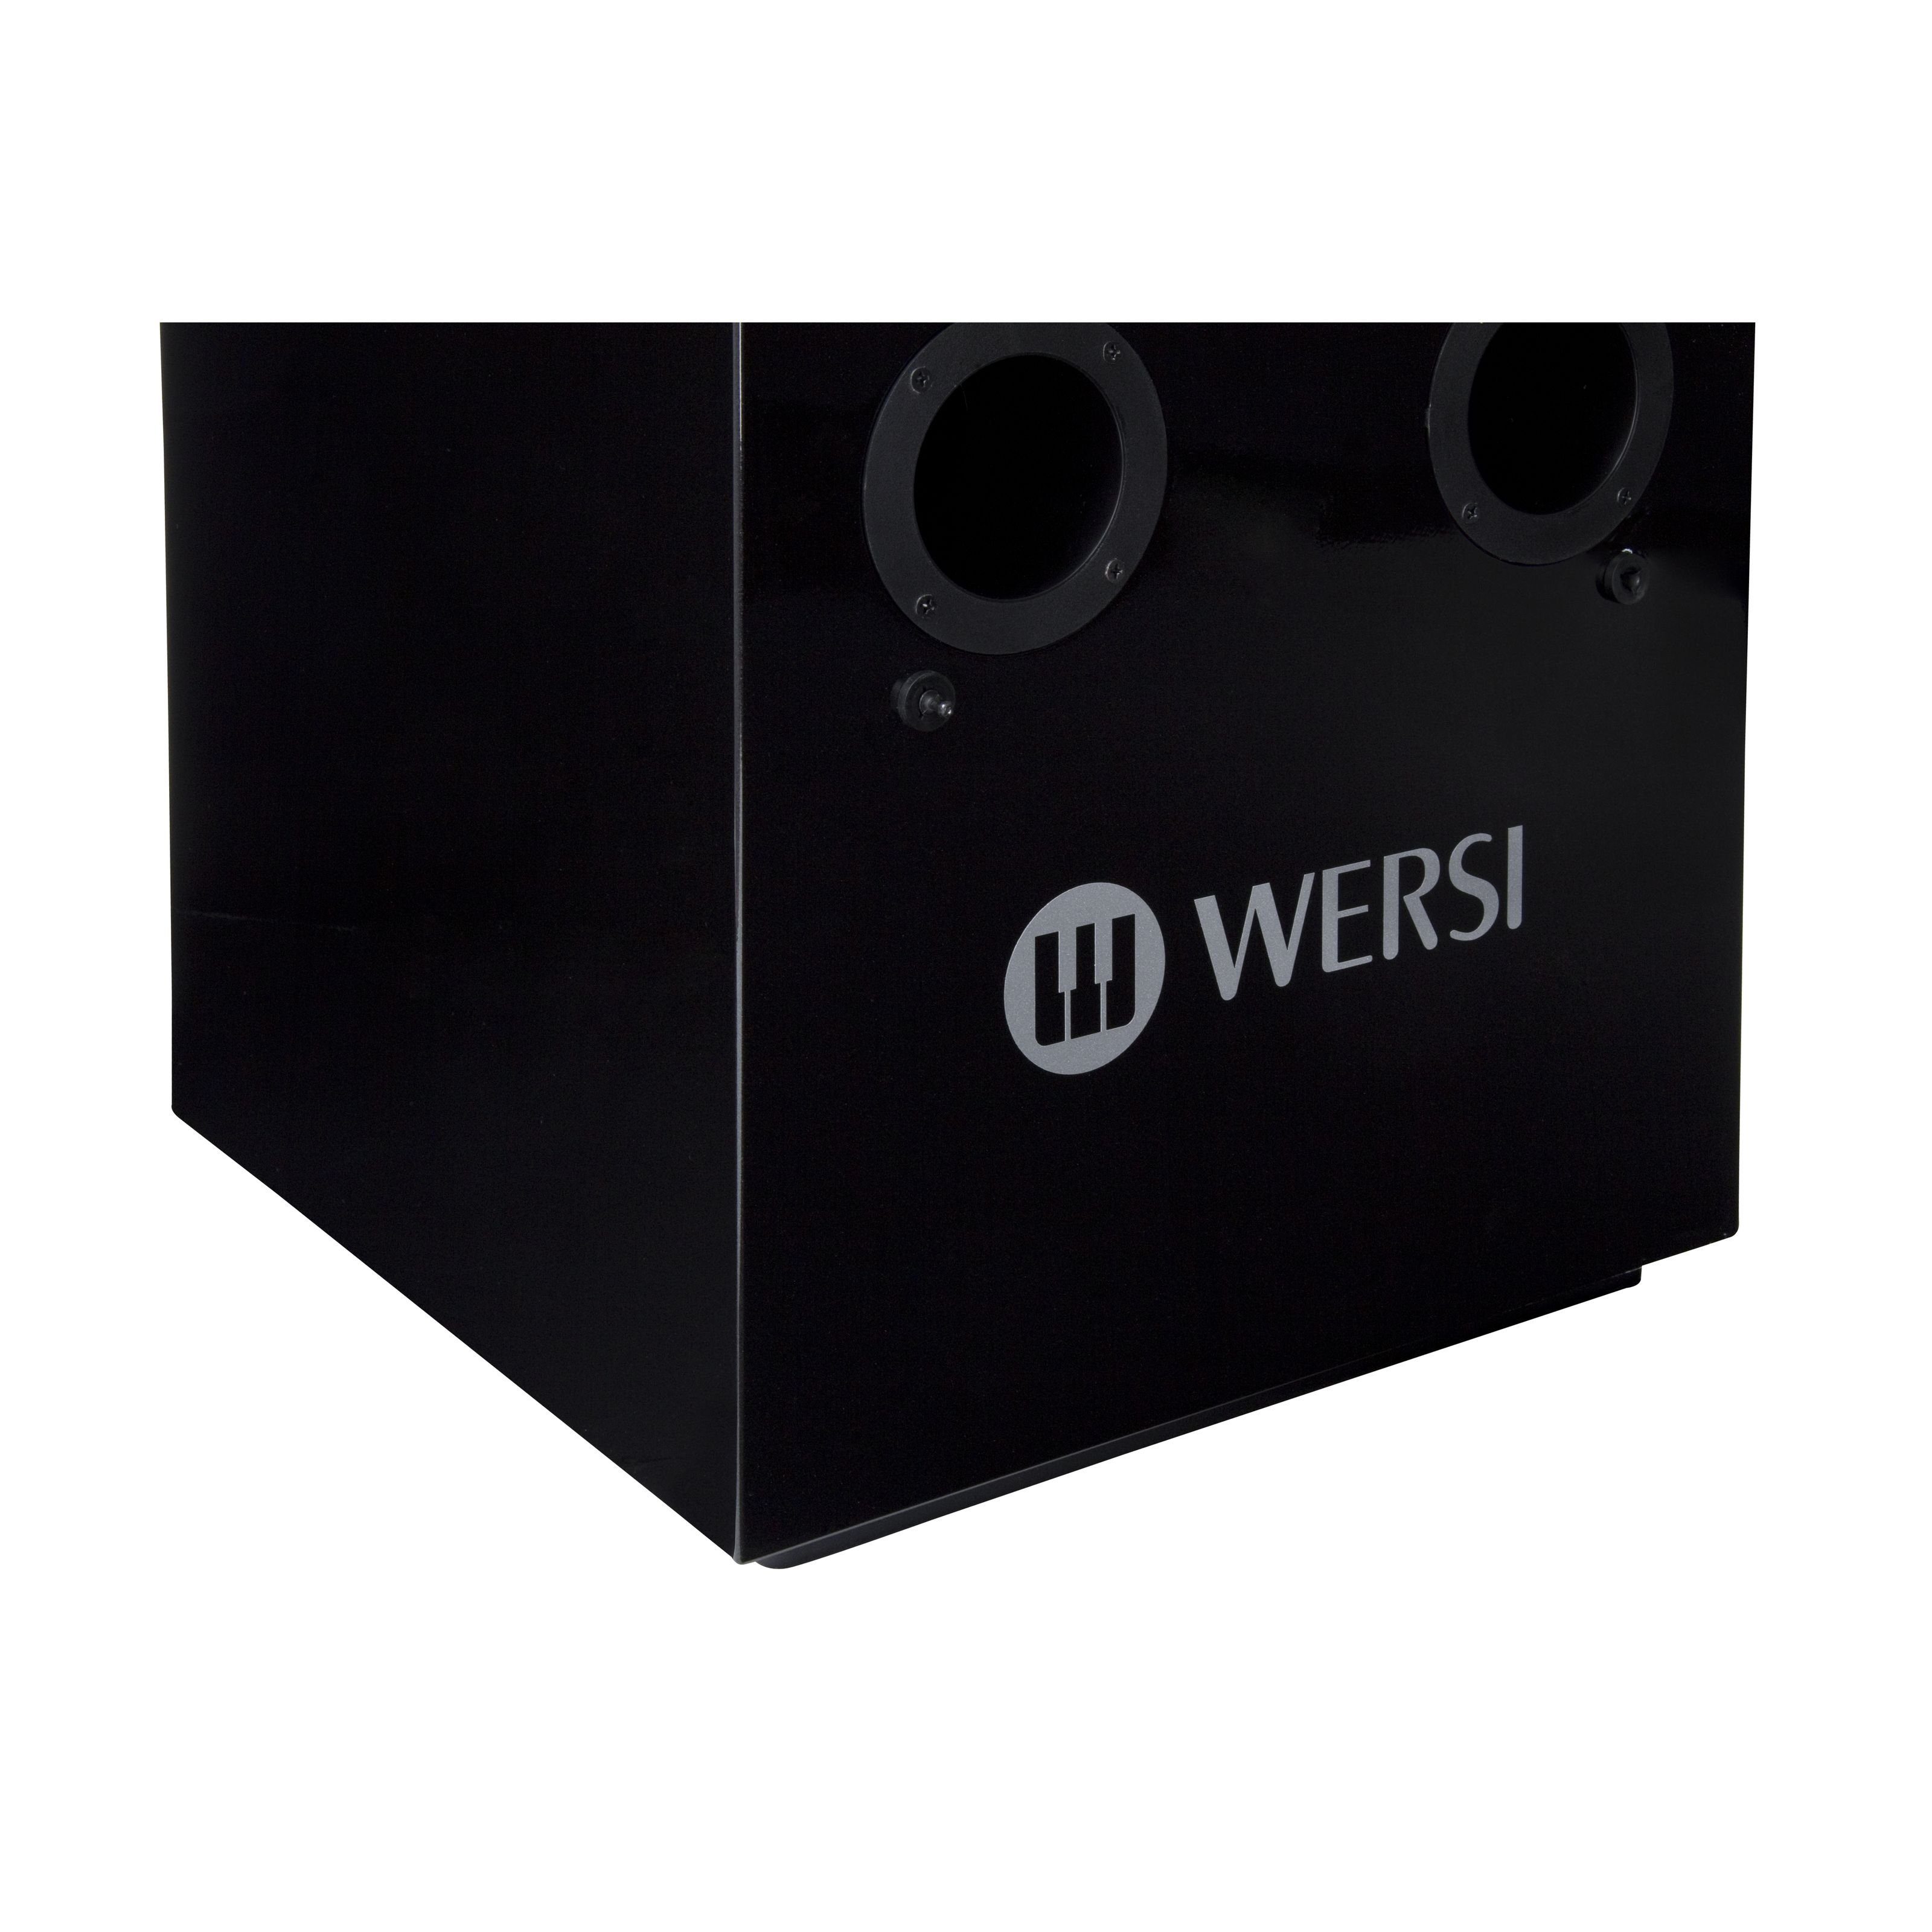 Wersi Verstärker Schwarz Metallic (TS9000, - Keyboardverstärker) Lautsprecherbox aktive